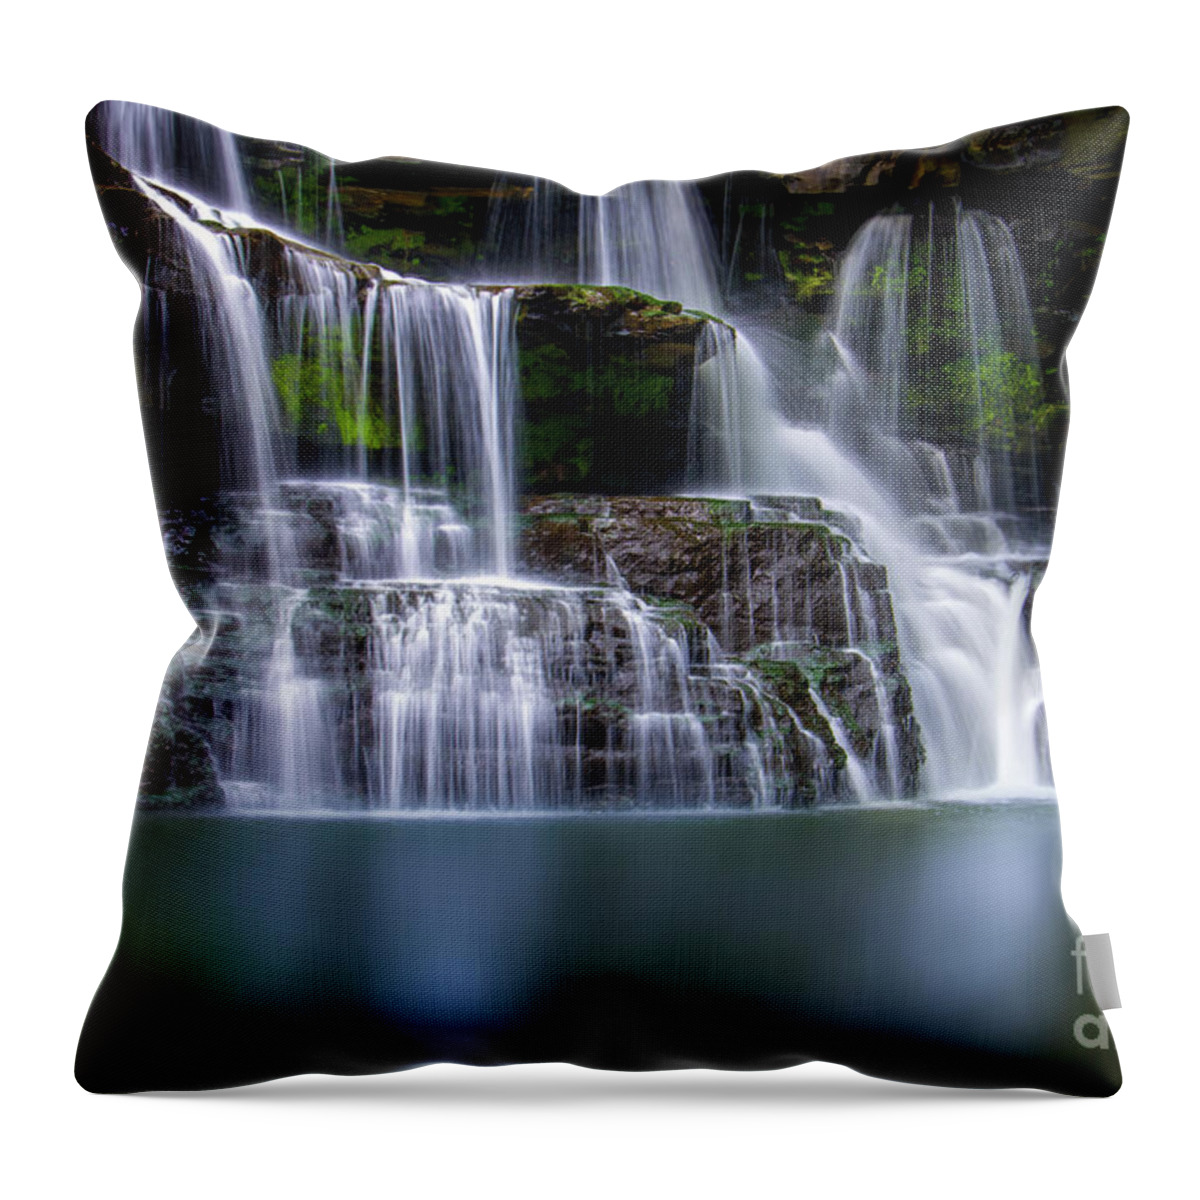 Brush Creek Falls Throw Pillow featuring the photograph Brush Creek Falls II by Shelia Hunt